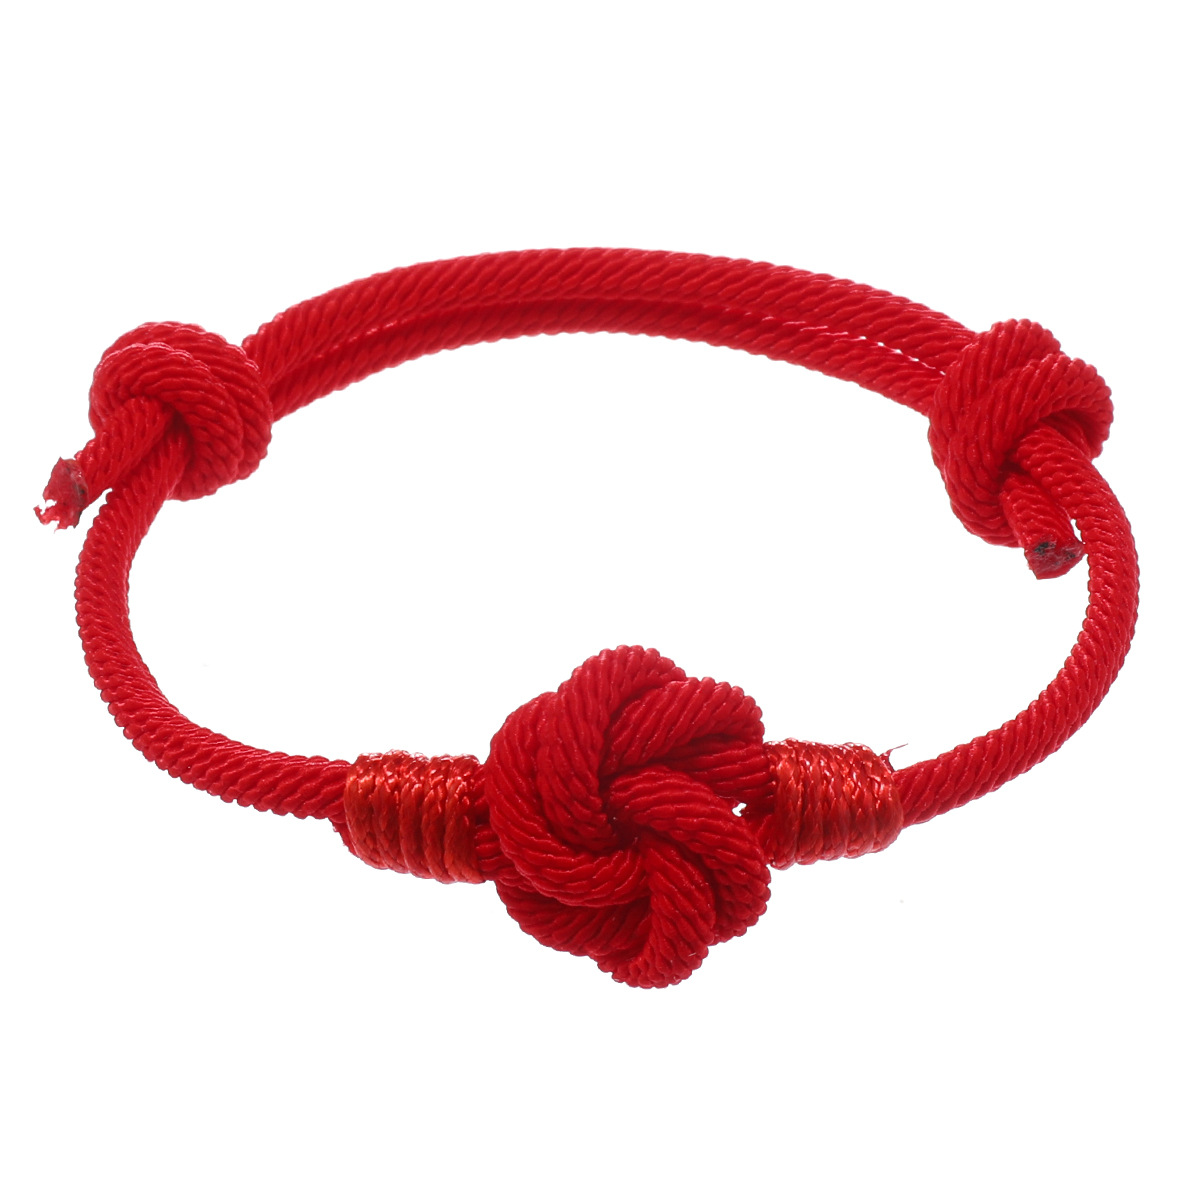 Red (mandala knot)